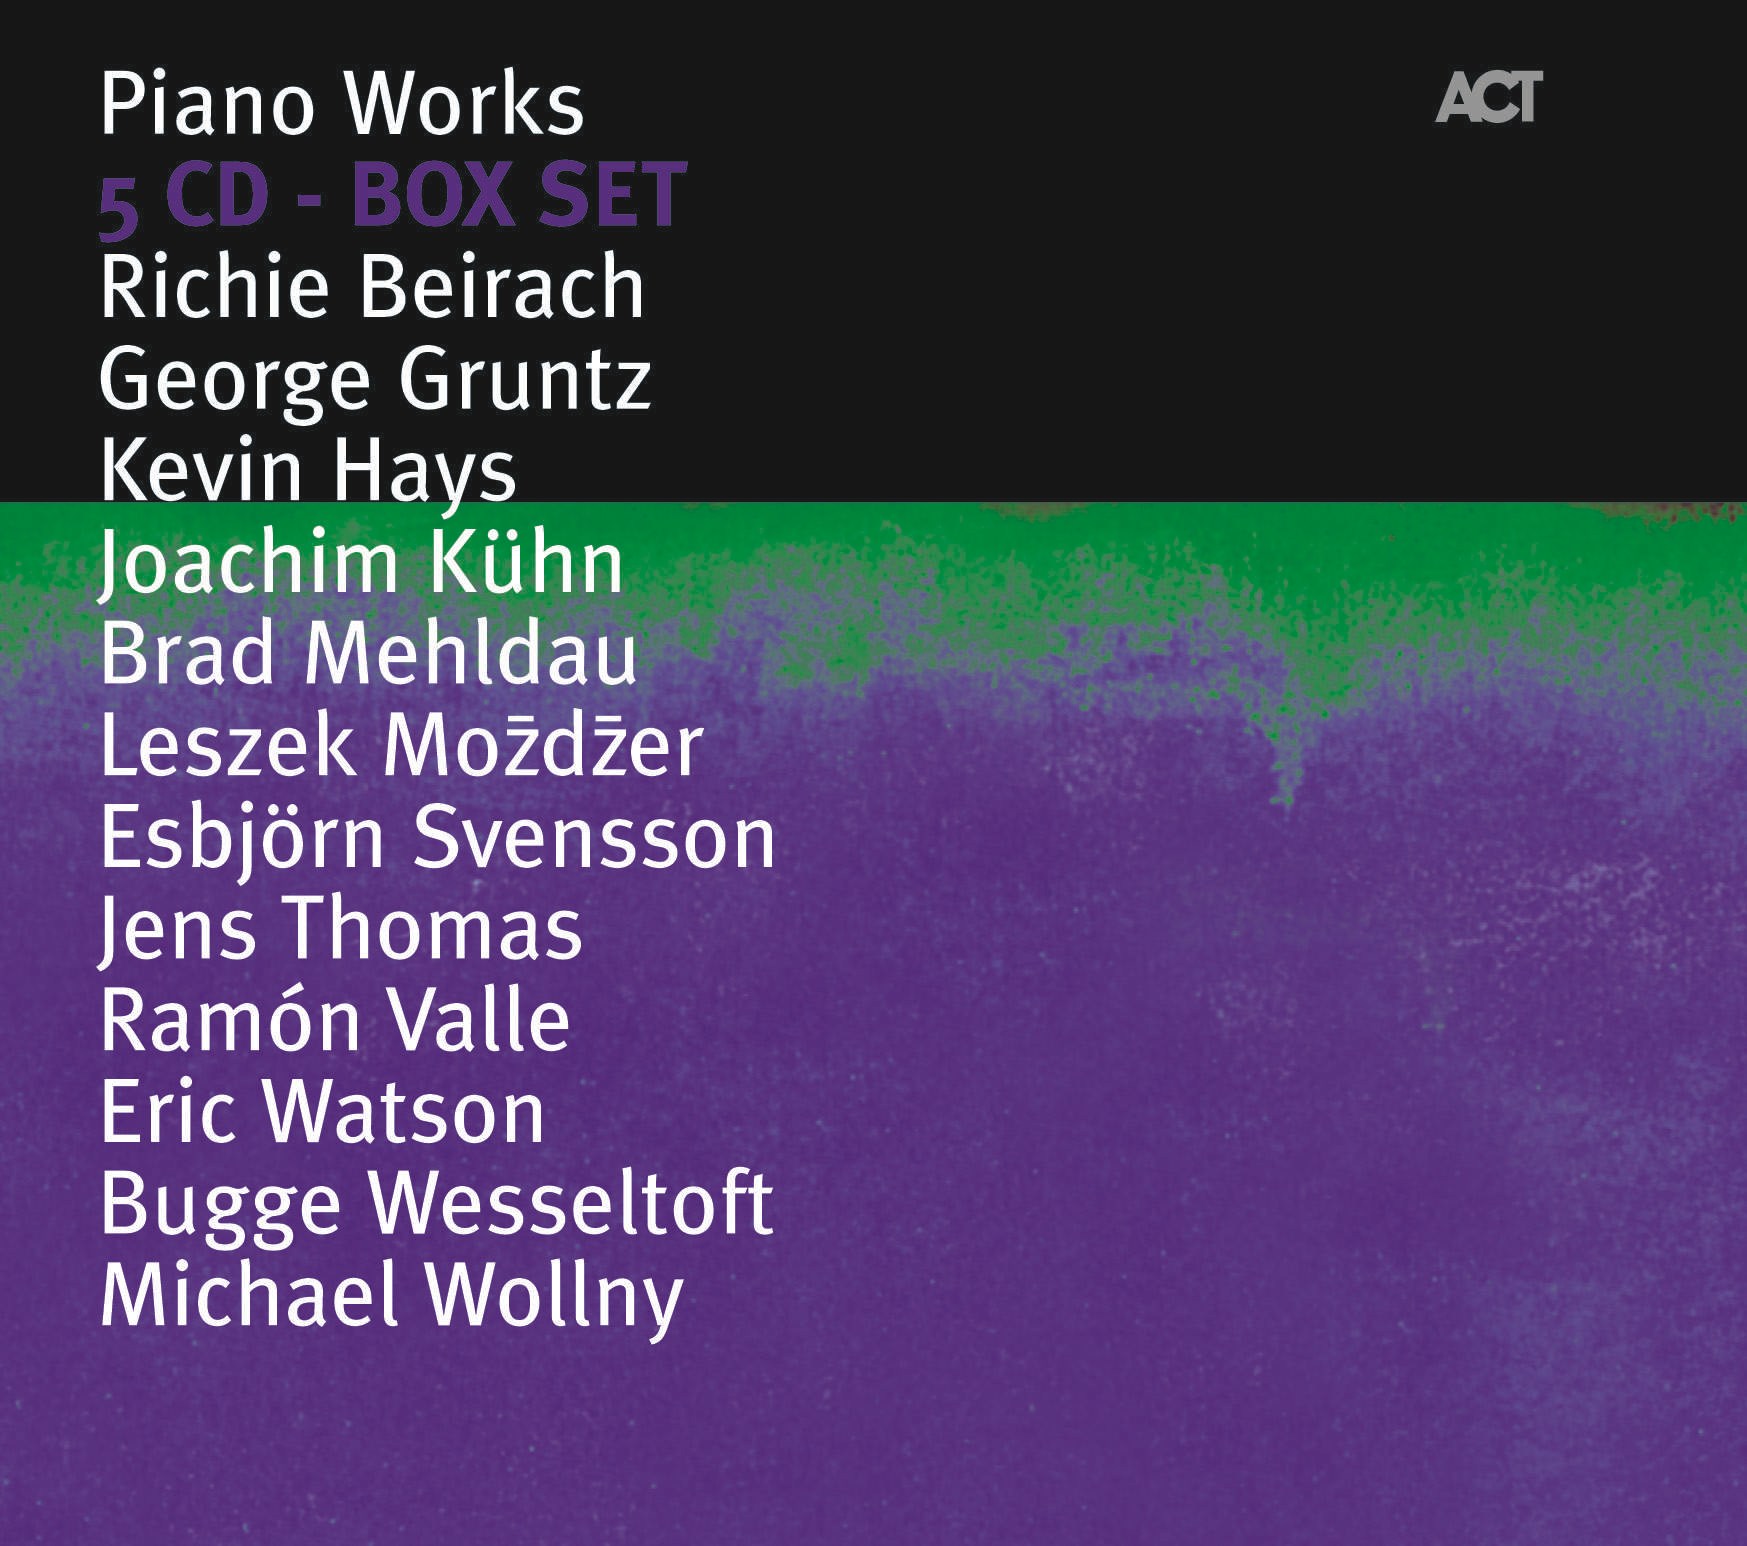 Piano Works 5 CD Box Set